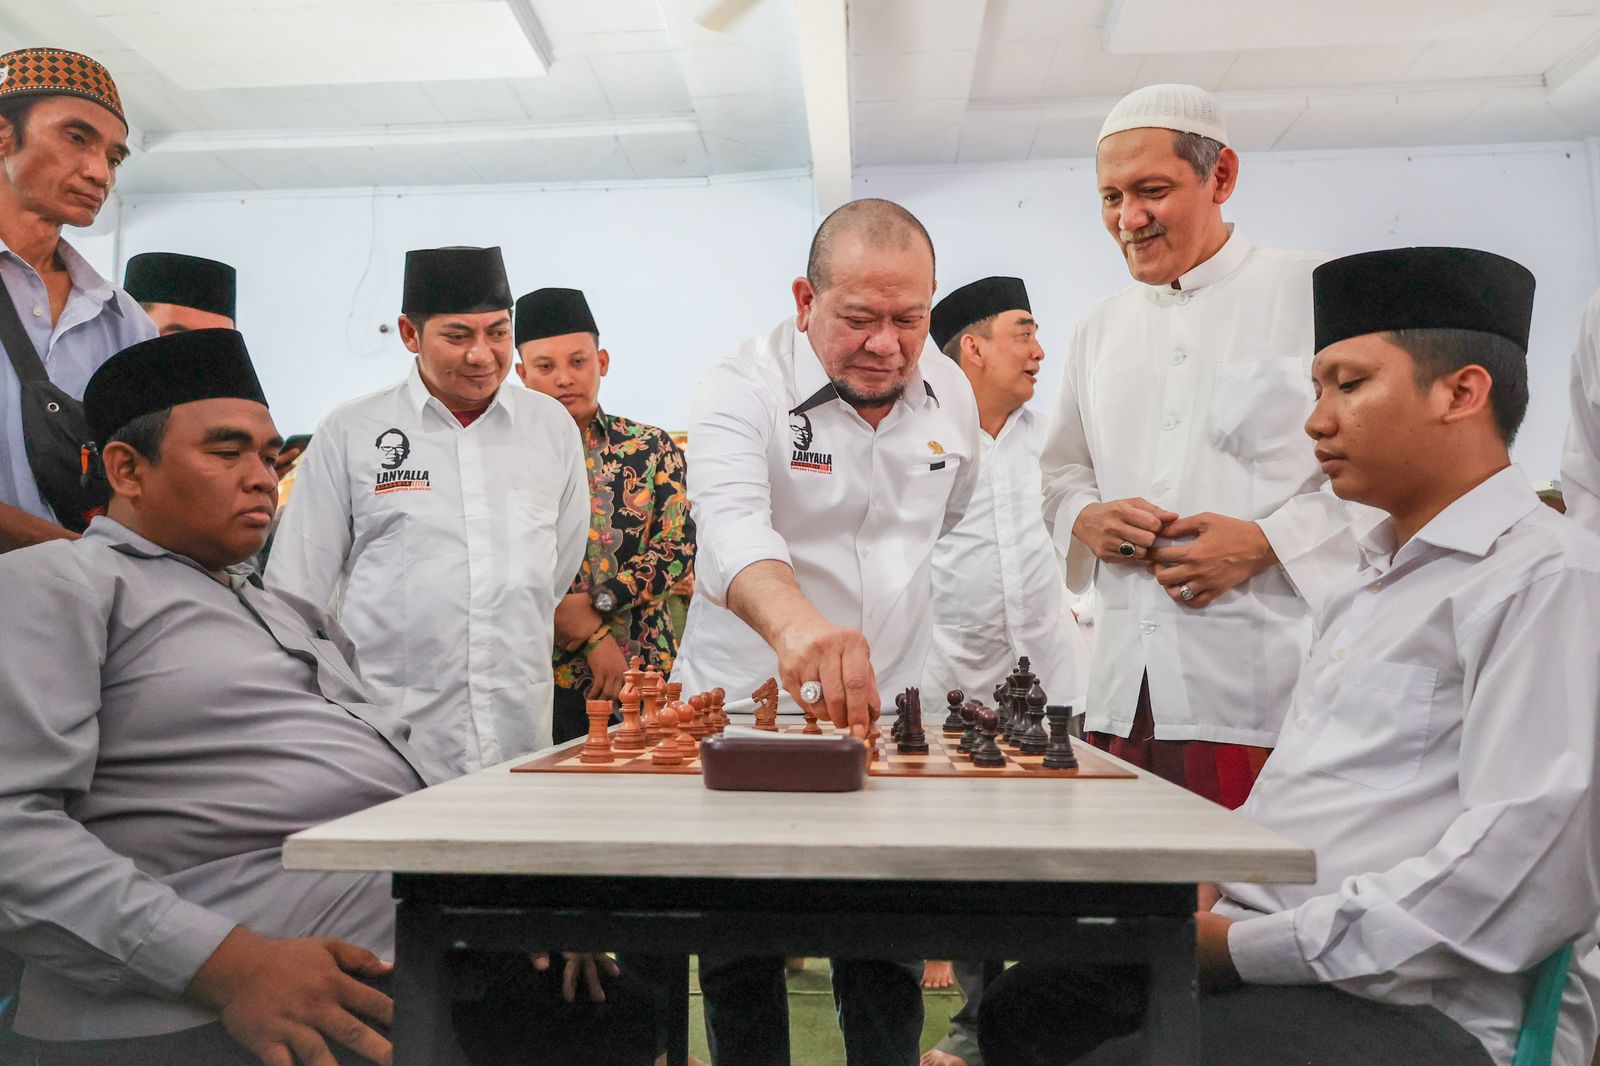 Buka Turnamen Catur Antarpesantren se-Madura, Ketua DPD RI Ulas Sejarah Islam 